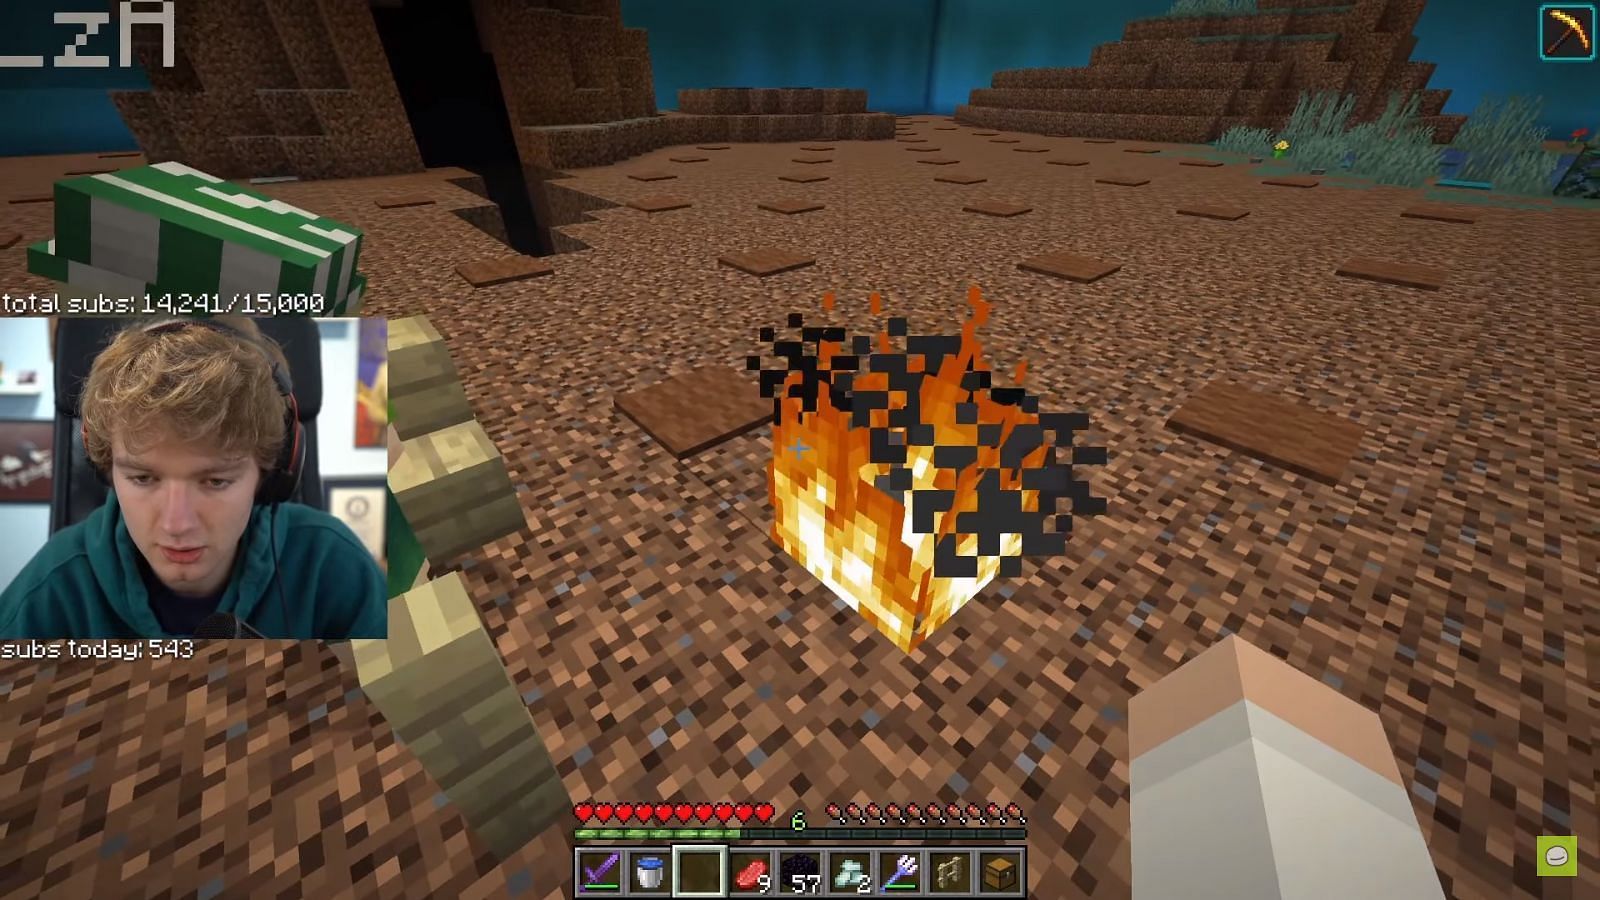 TommyInnit enchanted golden apple burnt on his stream (Image via Canooon, YouTube)